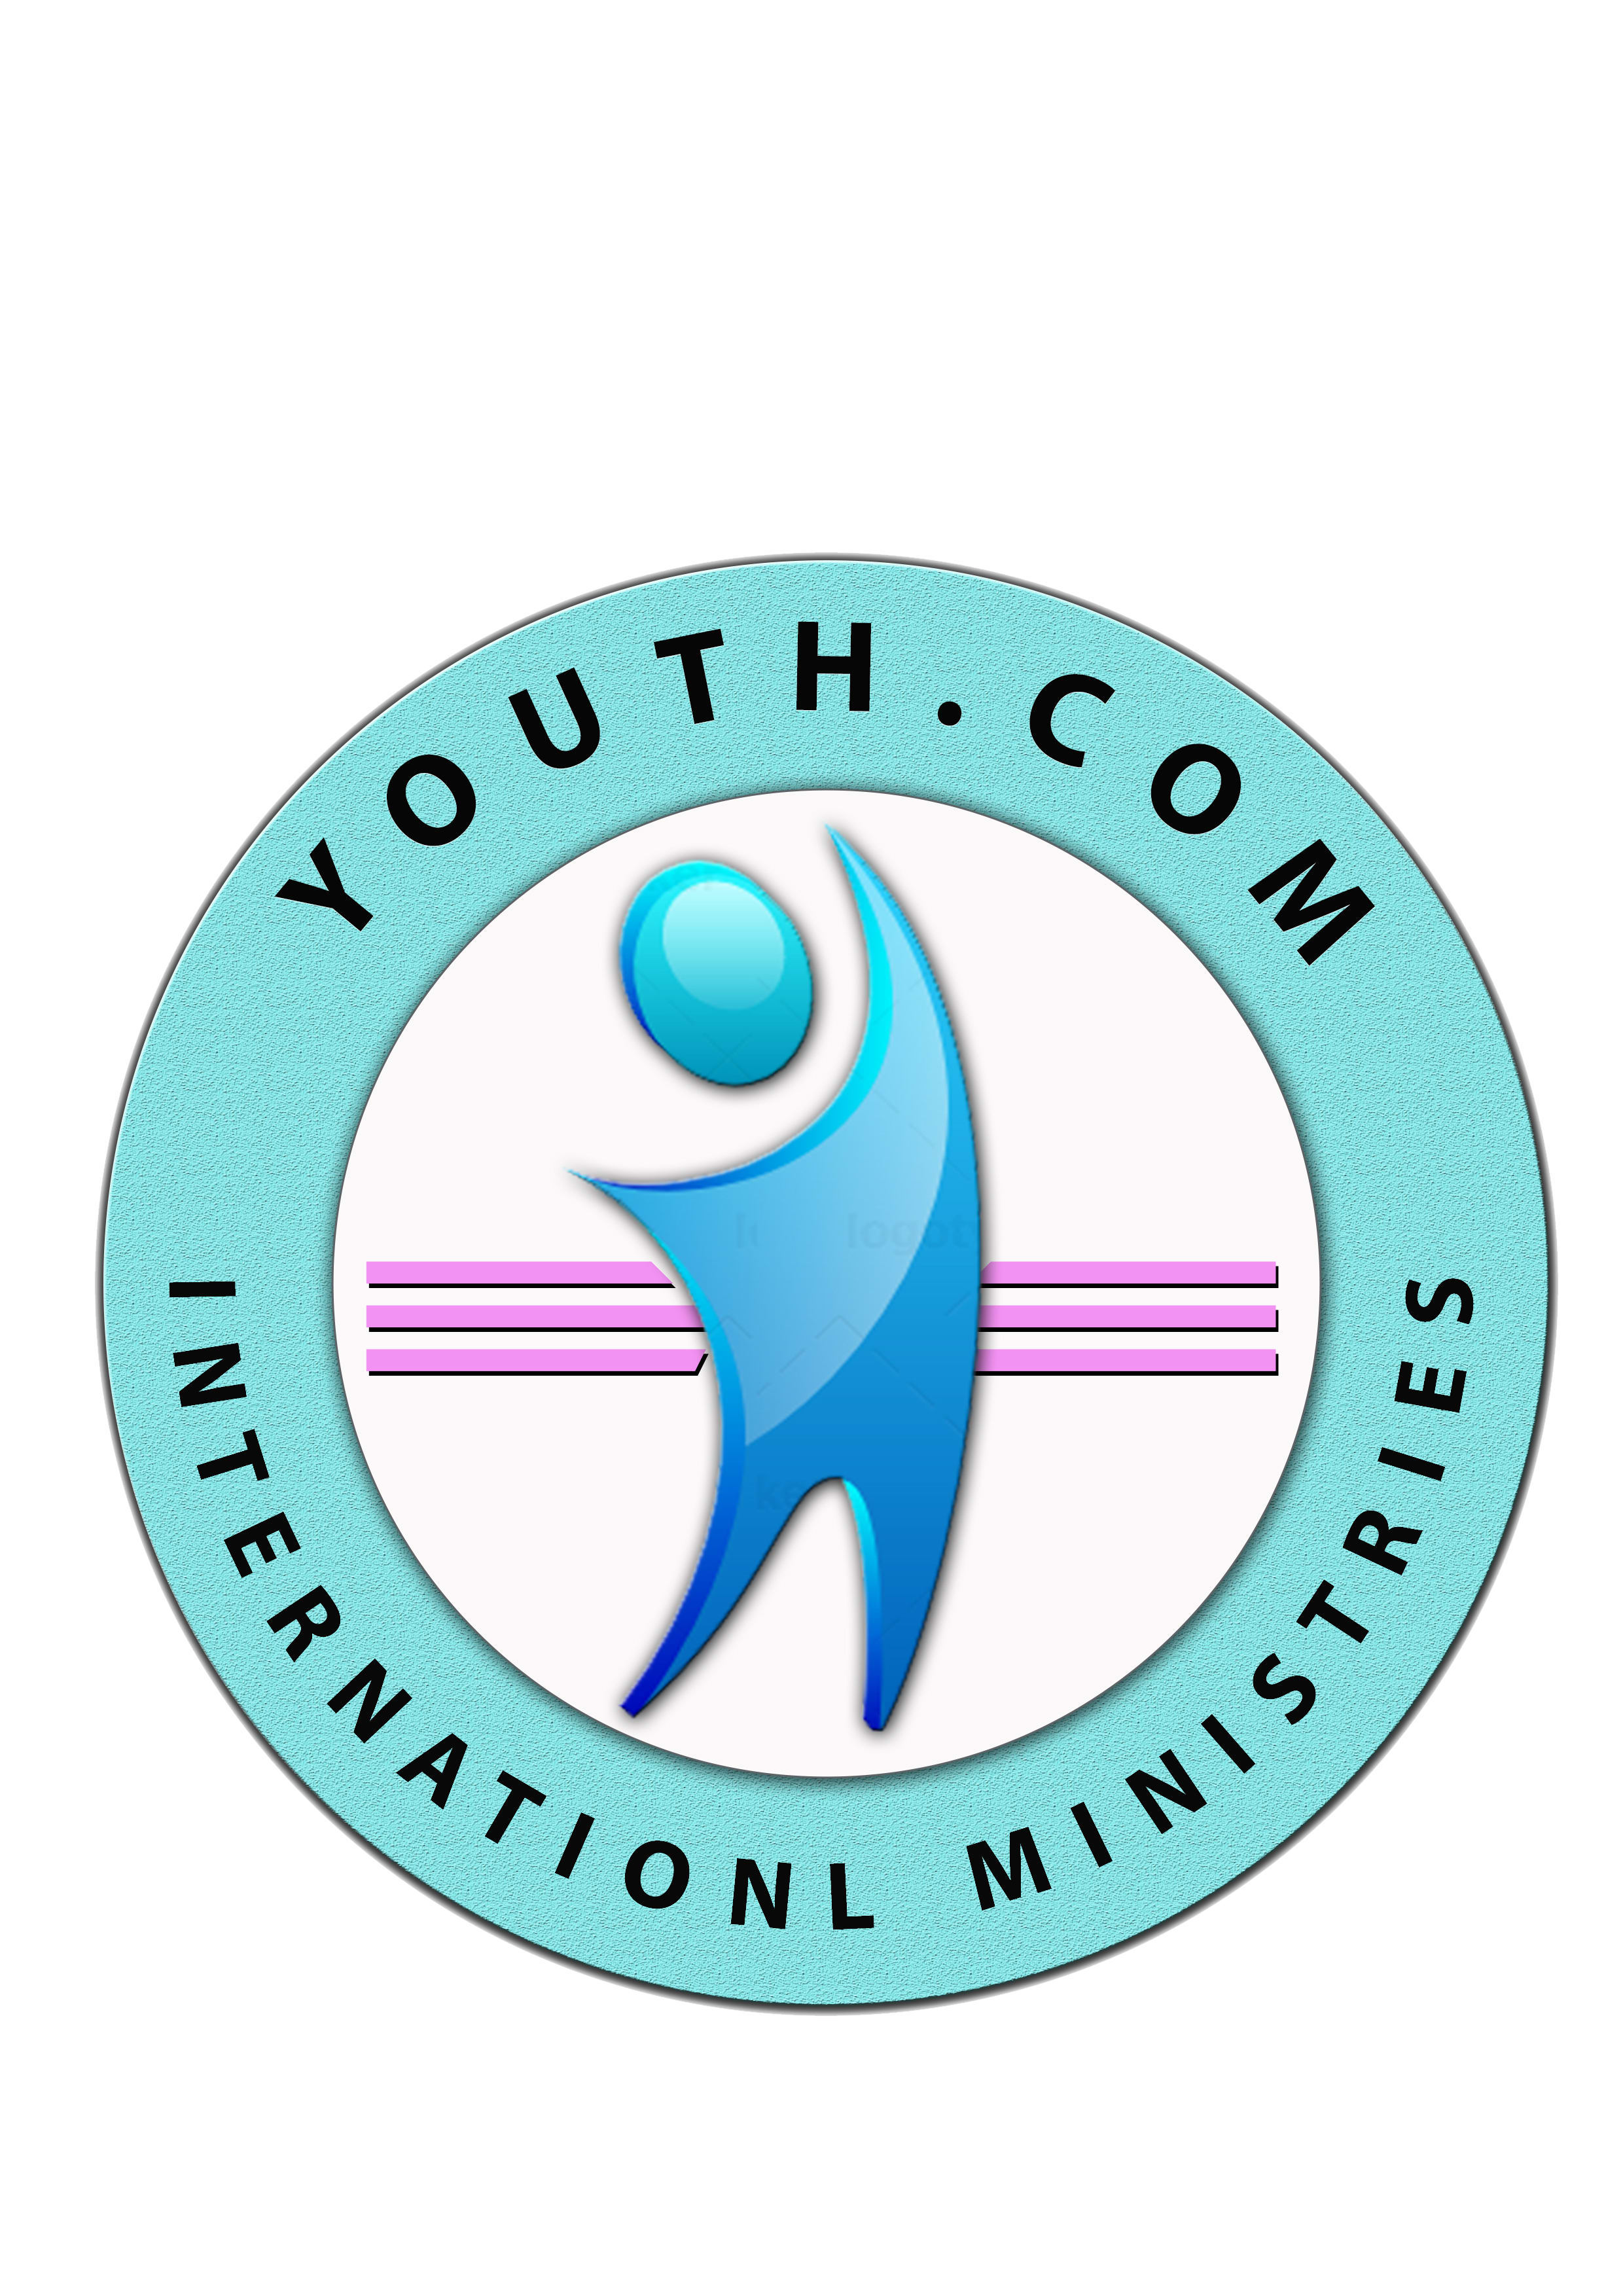 Youth.Com International Ministries